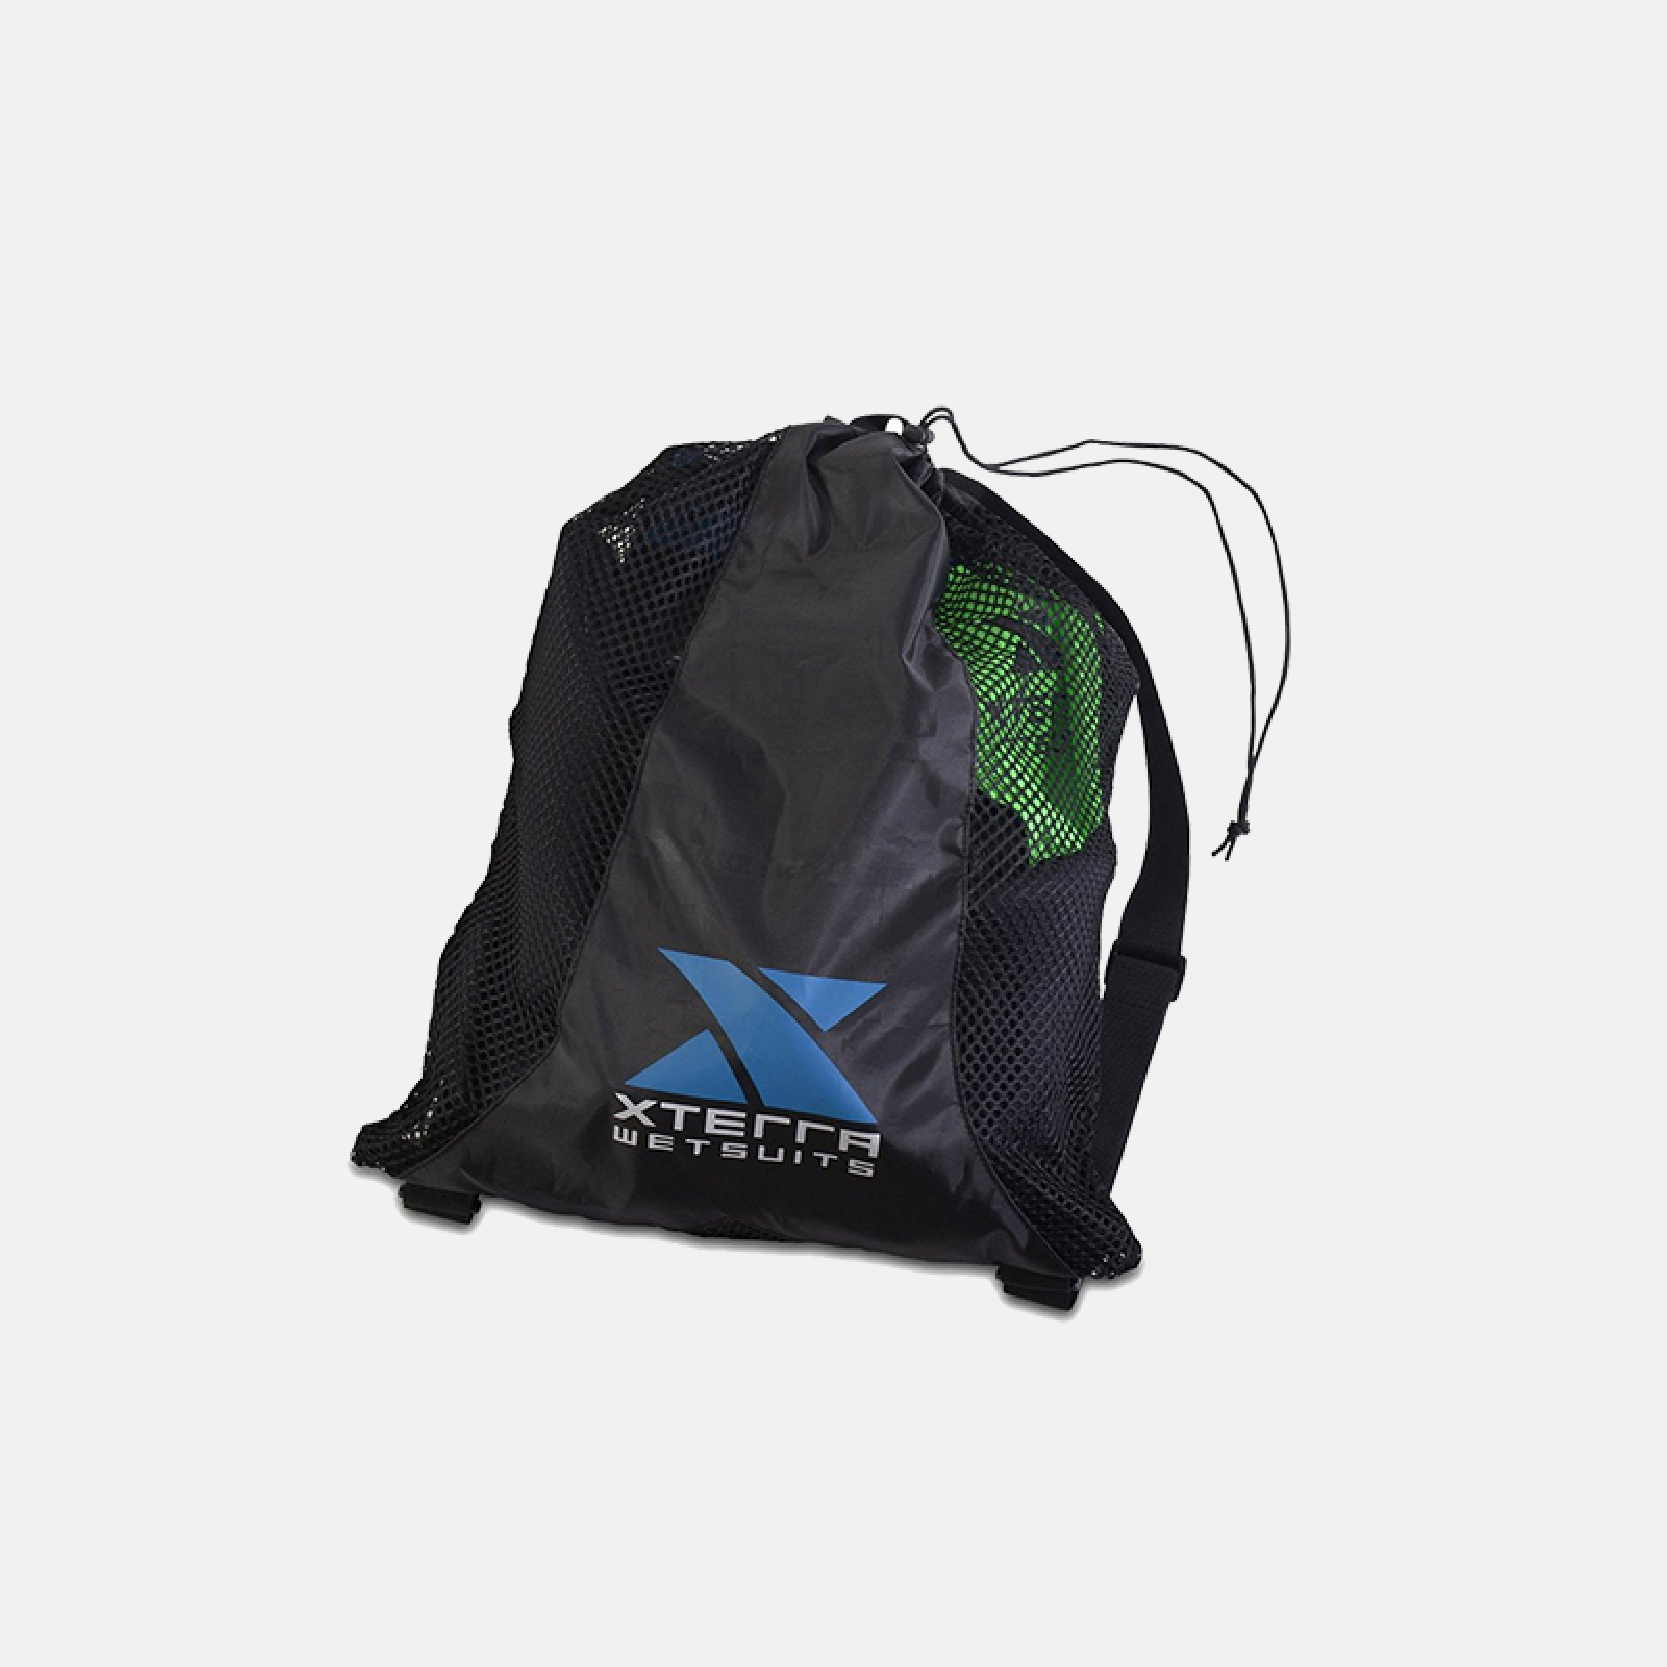 Mesh Swim Bag | Buy at XtremeSwim.com